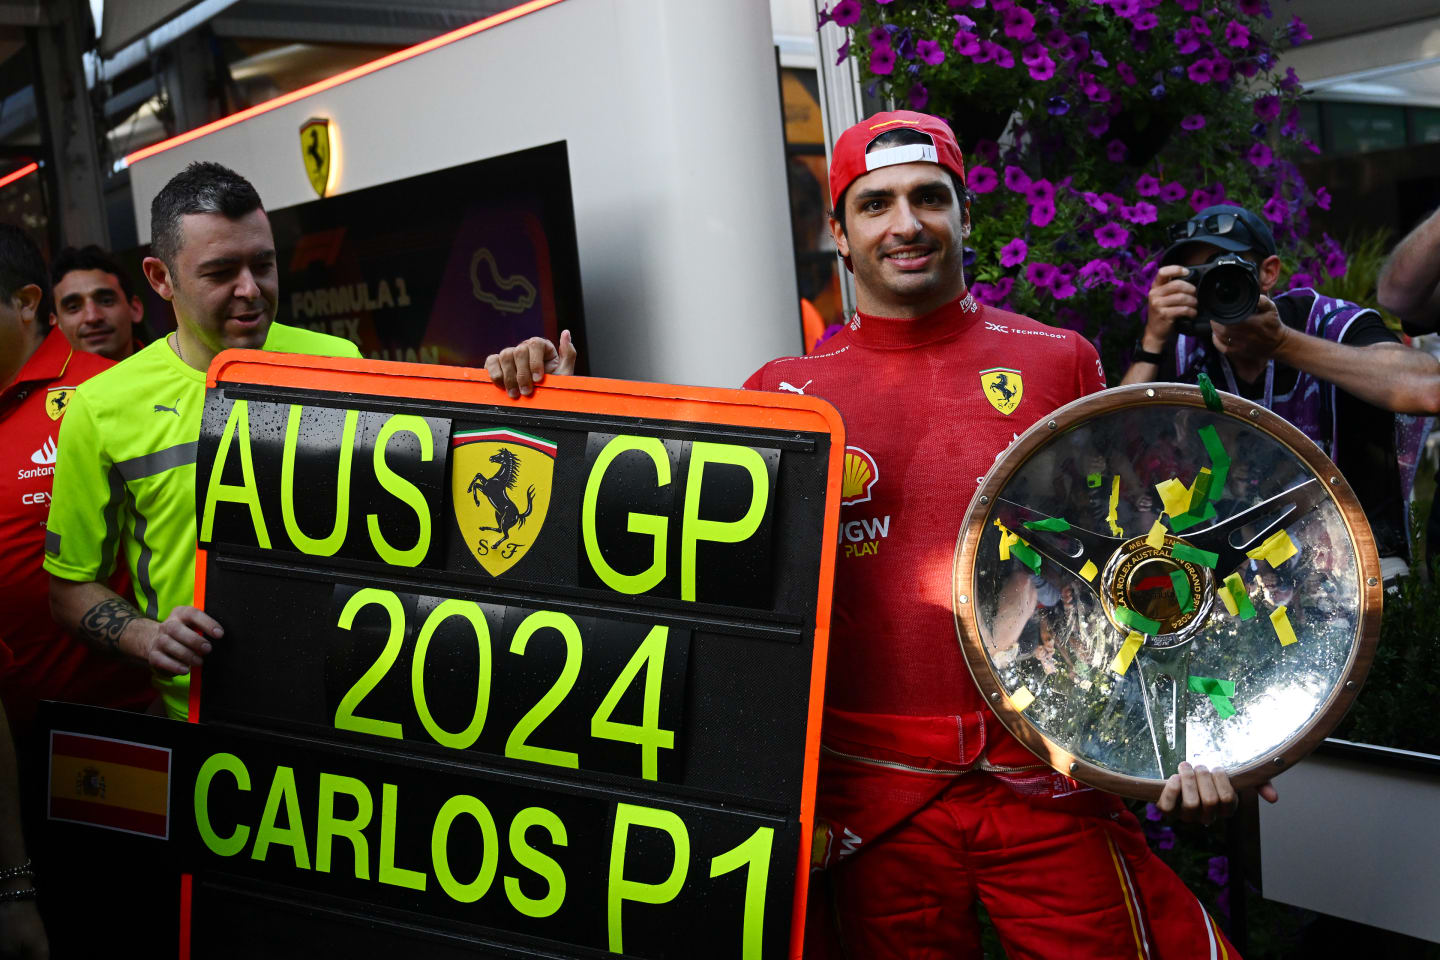 MELBOURNE, AUSTRALIA - MARCH 24: Race winner Carlos Sainz of Spain and Ferrari celebrates with his